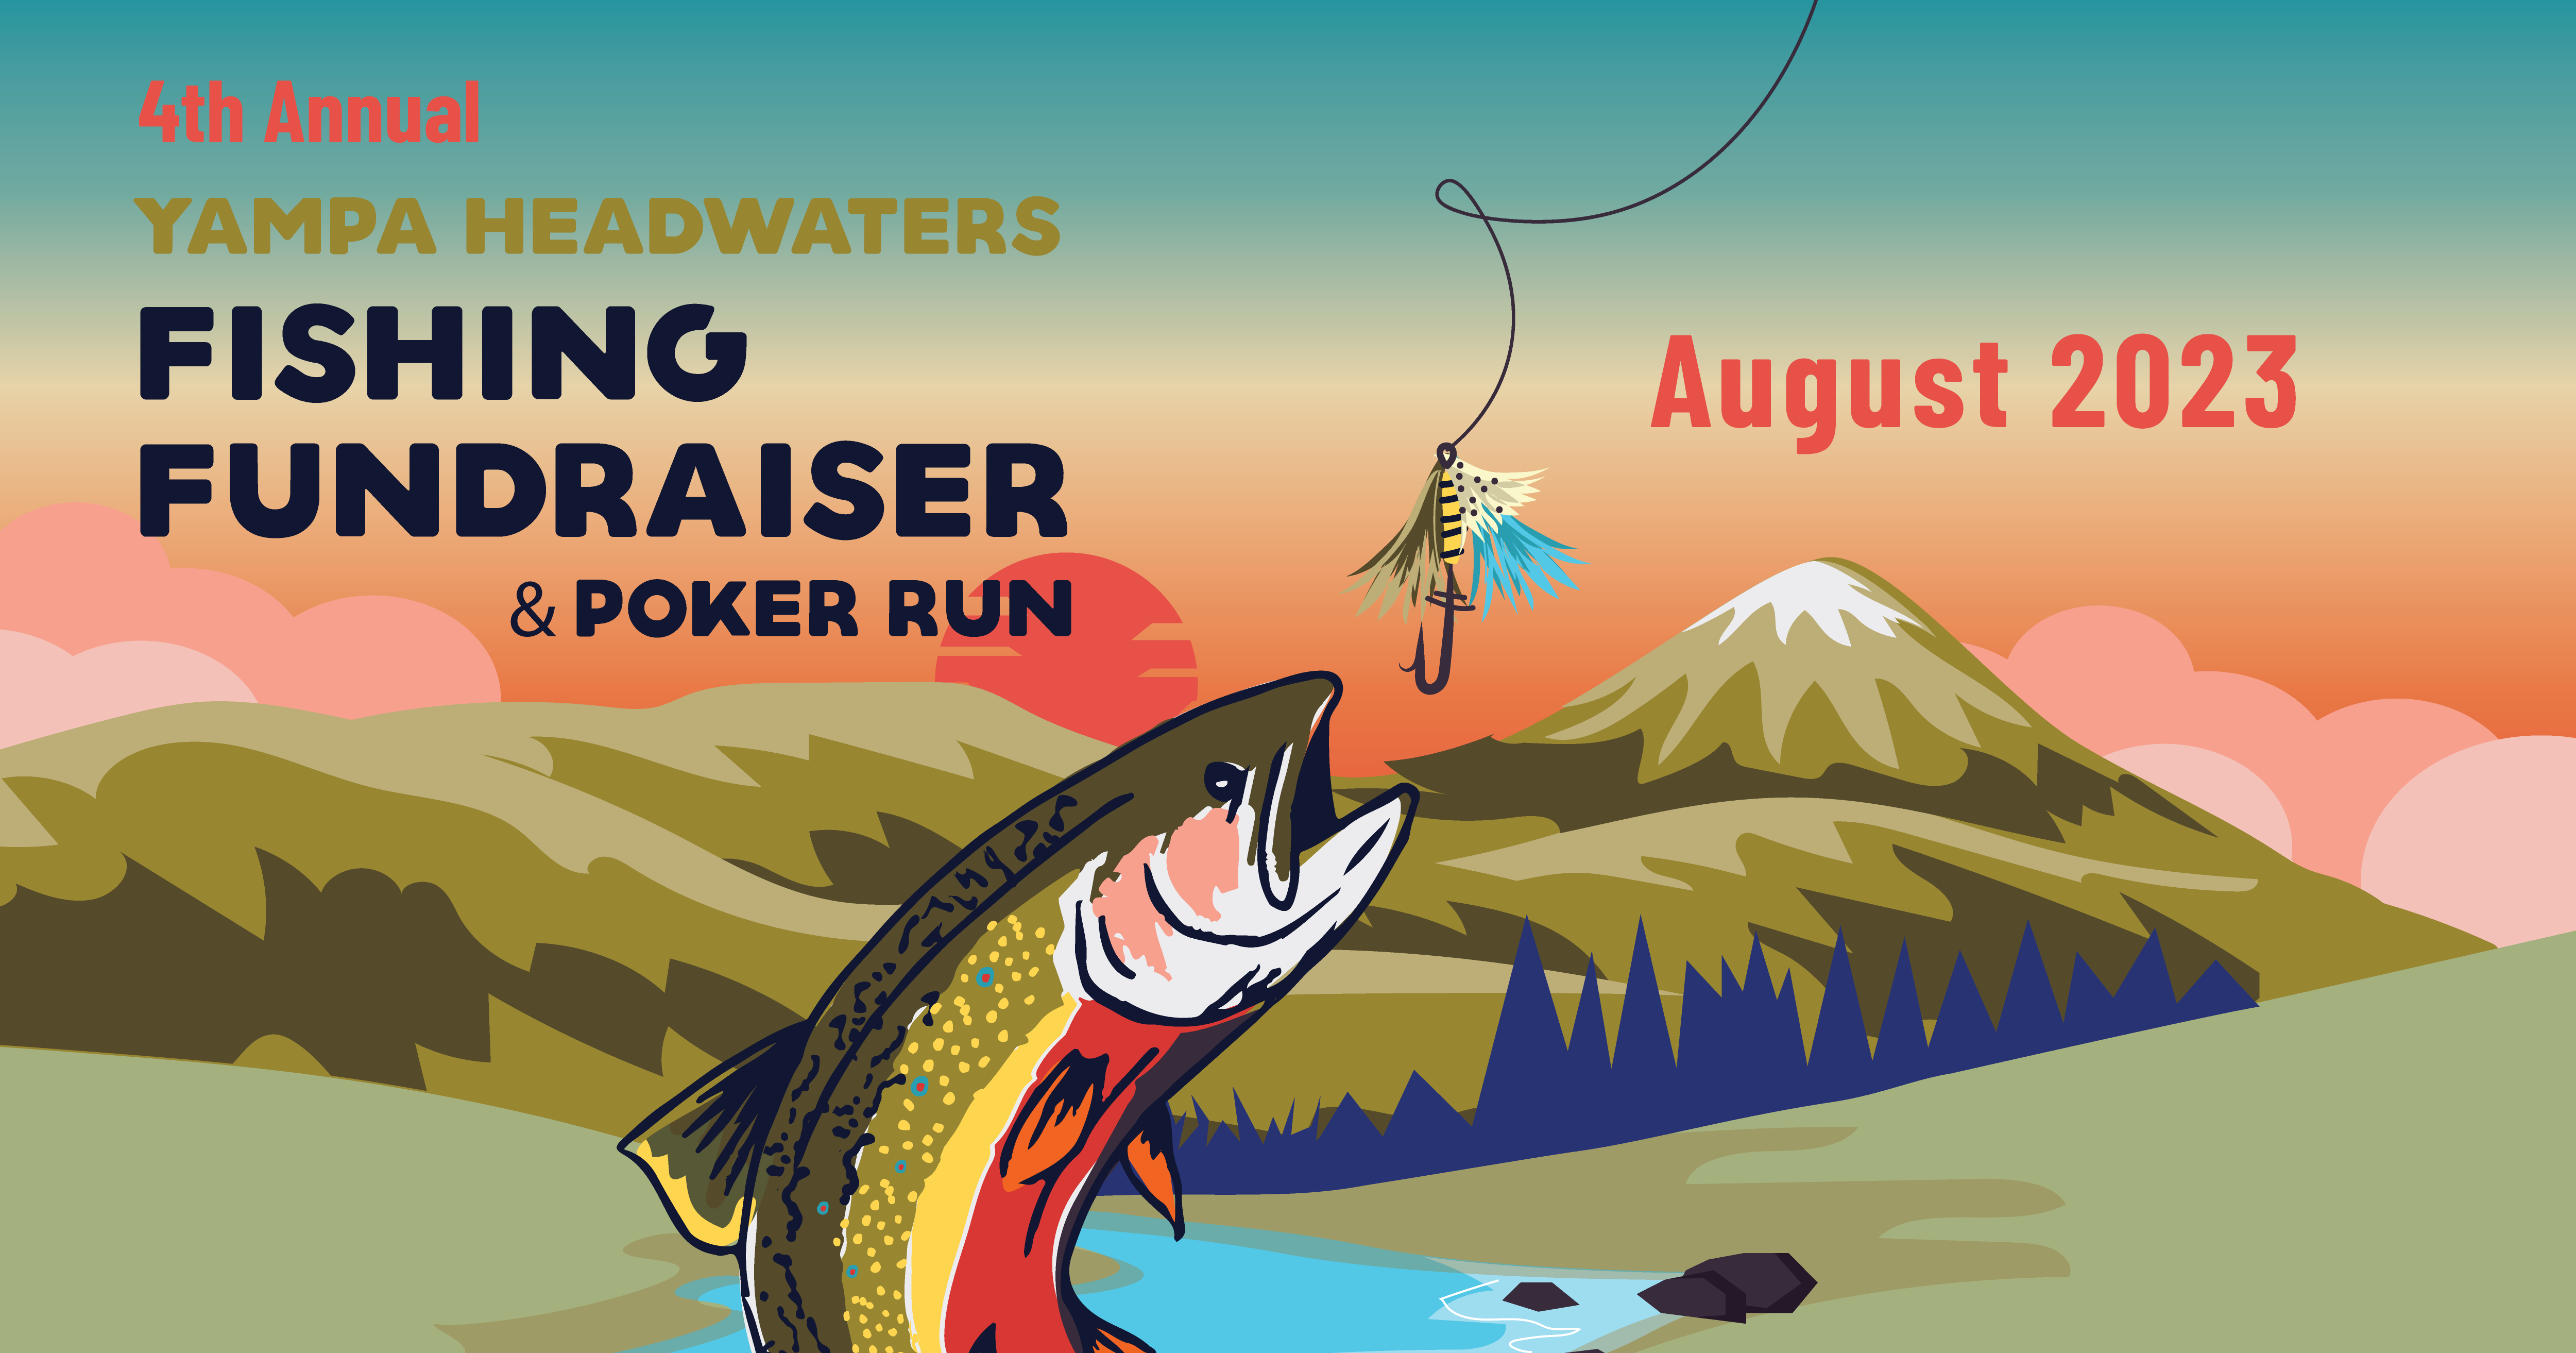 Yampa Headwaters Fishing Fundraiser and Poker Run - Friends of the Yampa